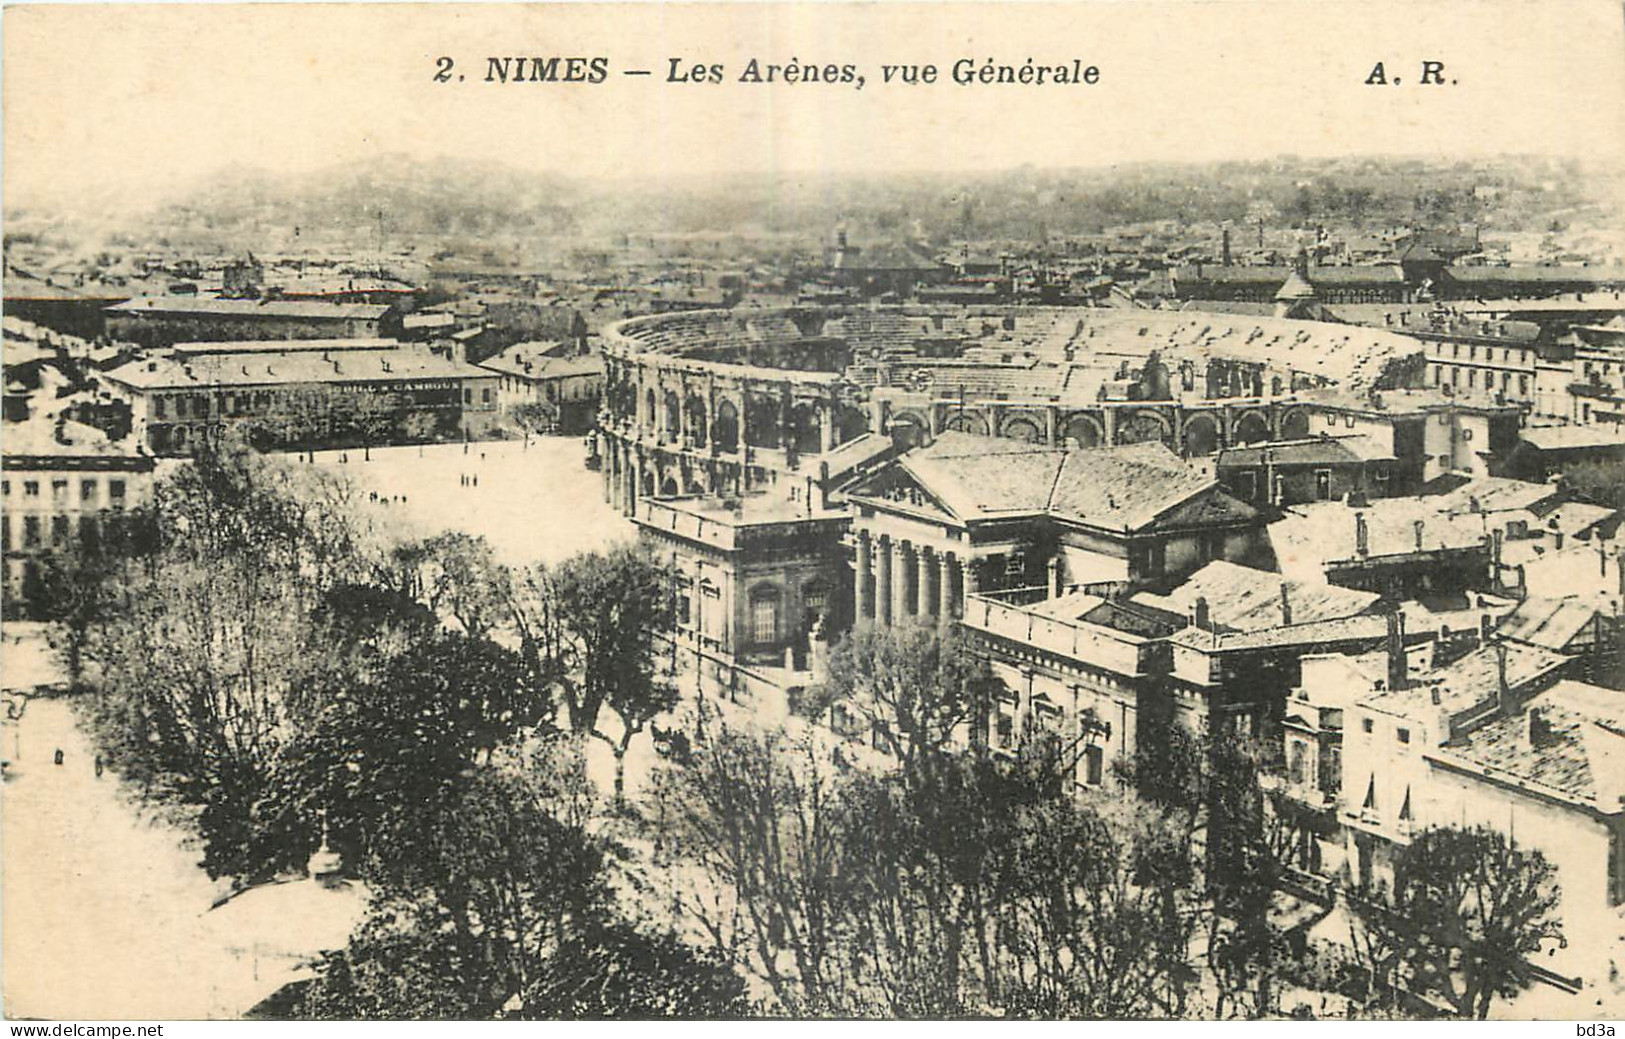 30 - NIMES - LES ARENES  - VUE GENERALE - A.R. - 2 - Nîmes